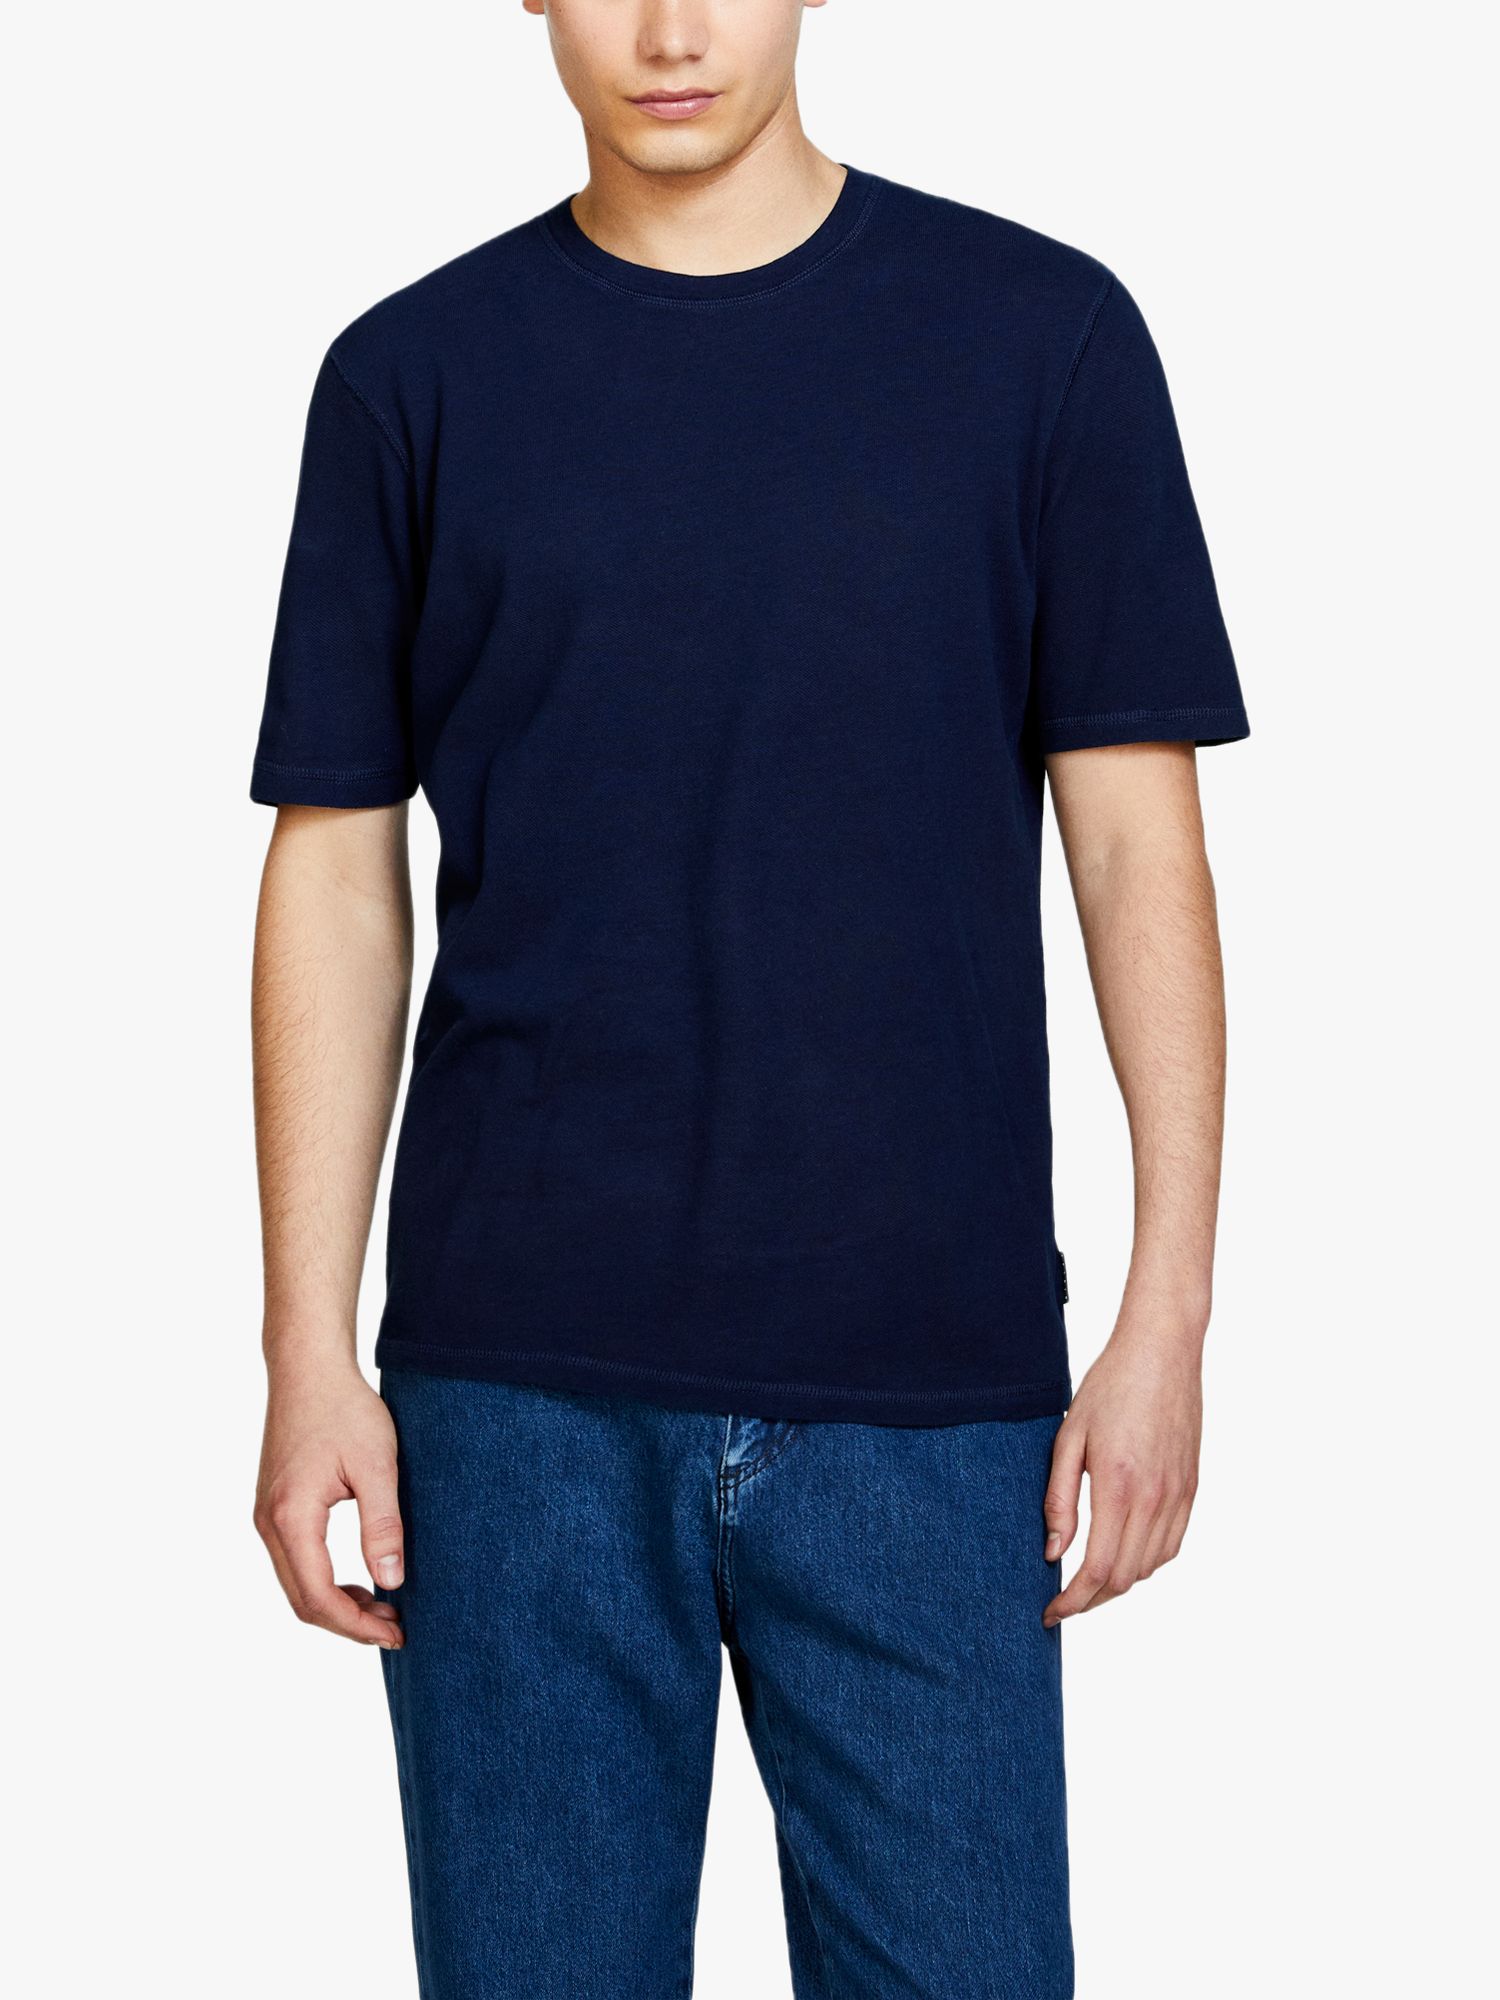 SISLEY Cotton Pique T-Shirt, Navy, XXL